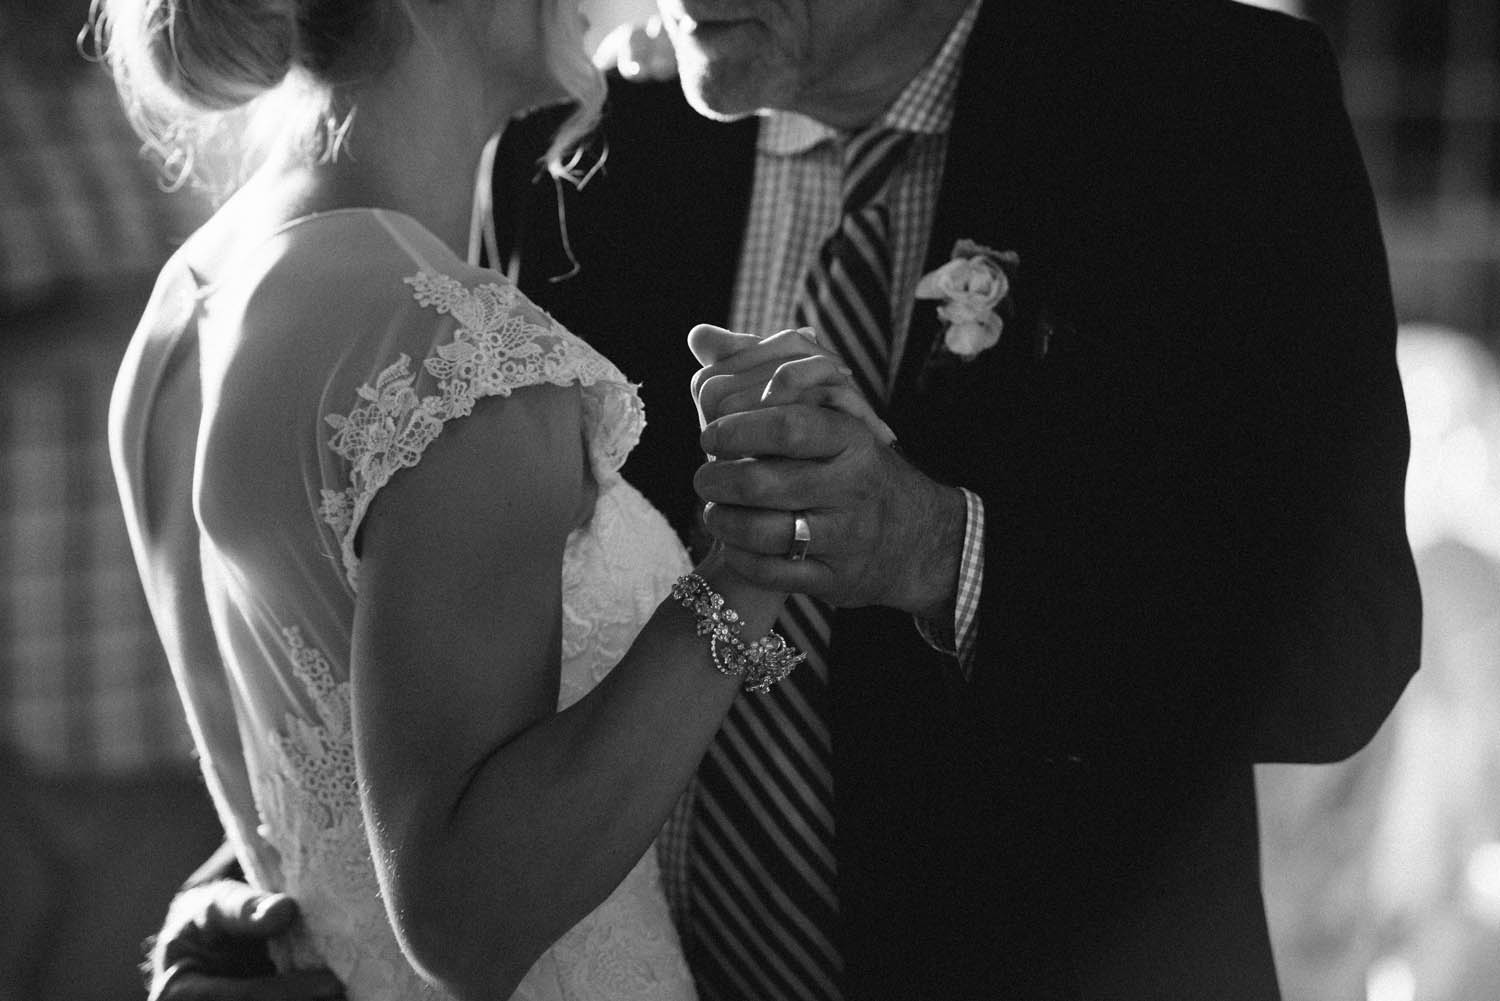 Lindsay + Maciek Featured Work Kampphotography Winnipeg Wedding Photographers 